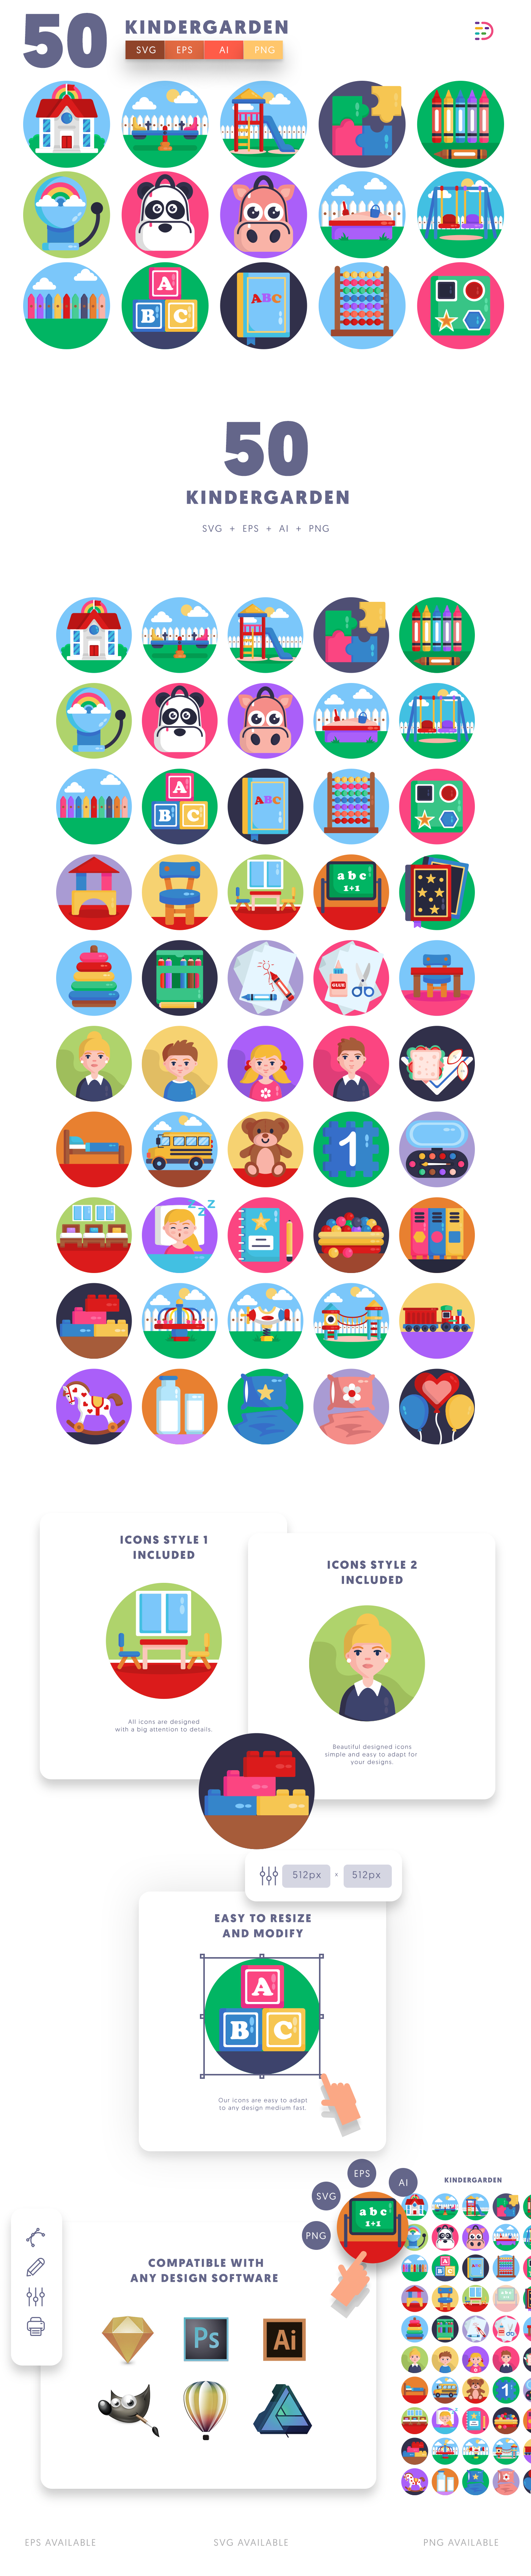 Kindergarden icons info graphic